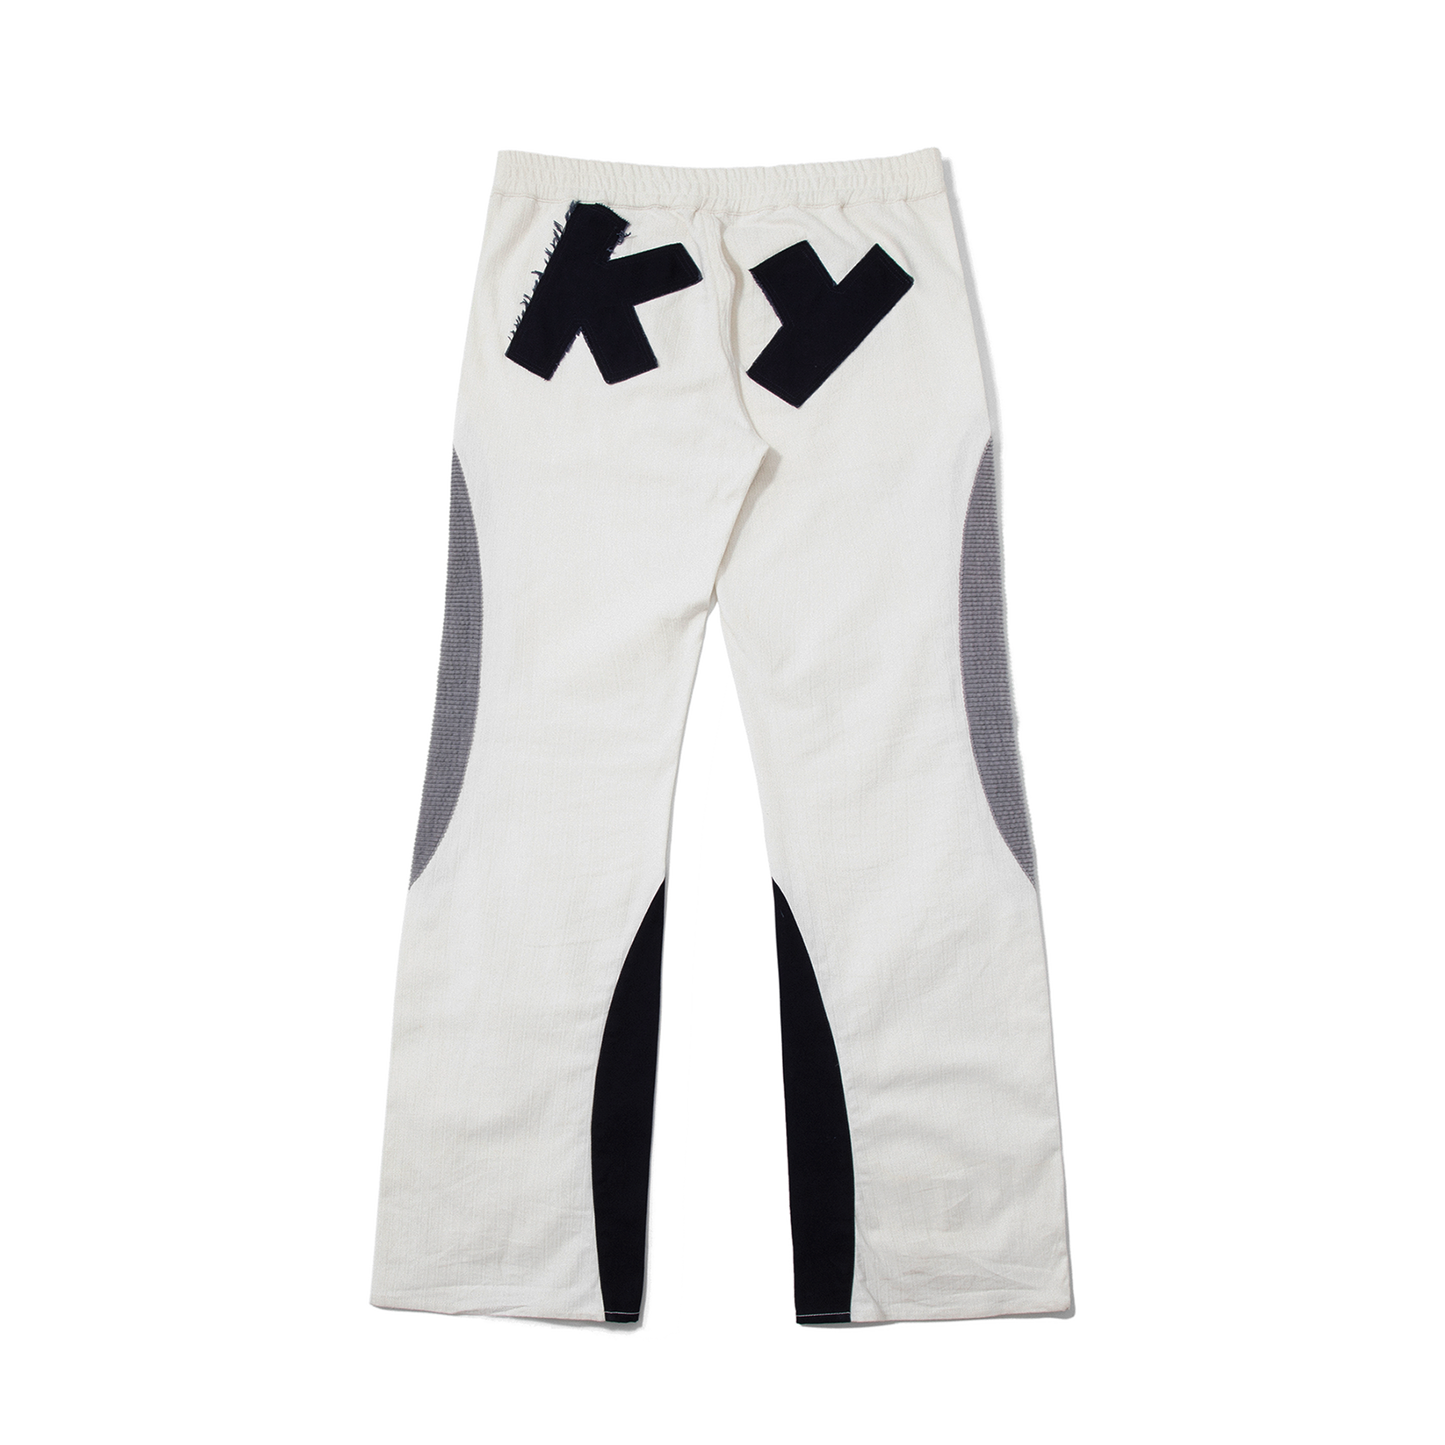 KILLWHY·Injured Pants “受伤拼合裤”